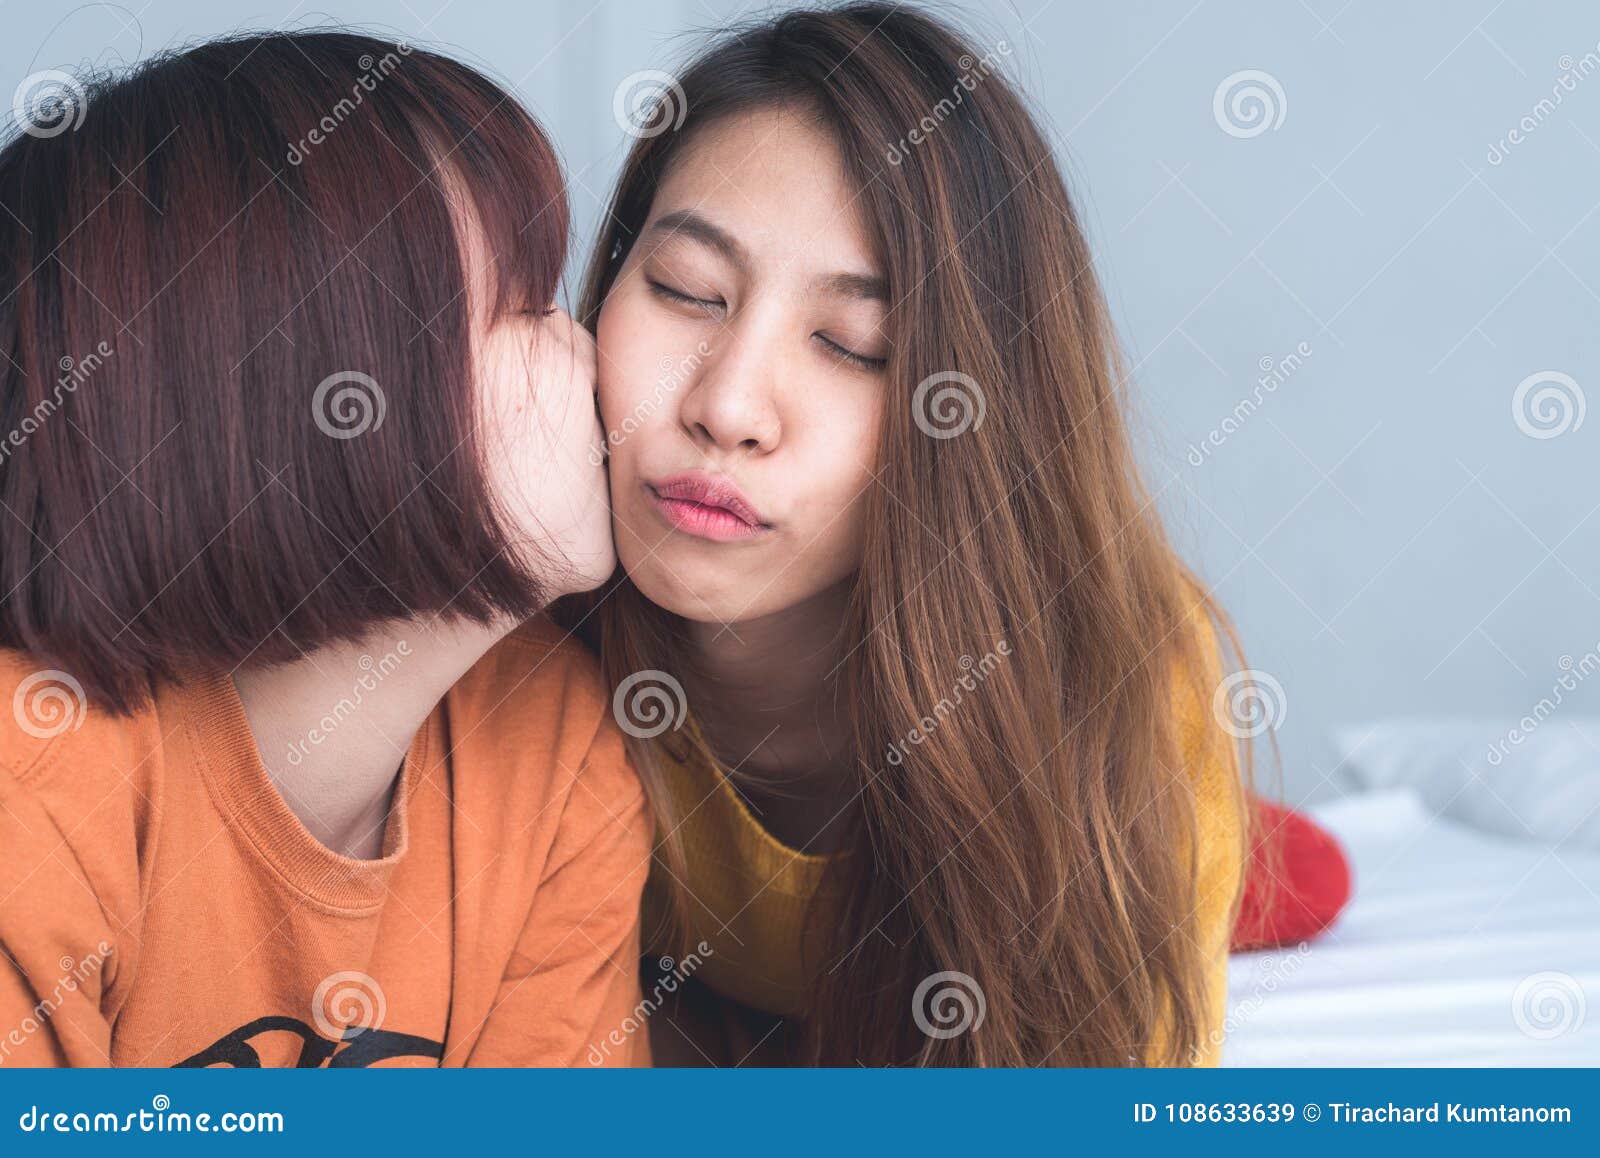 Japanese Lesbian Group Kissing